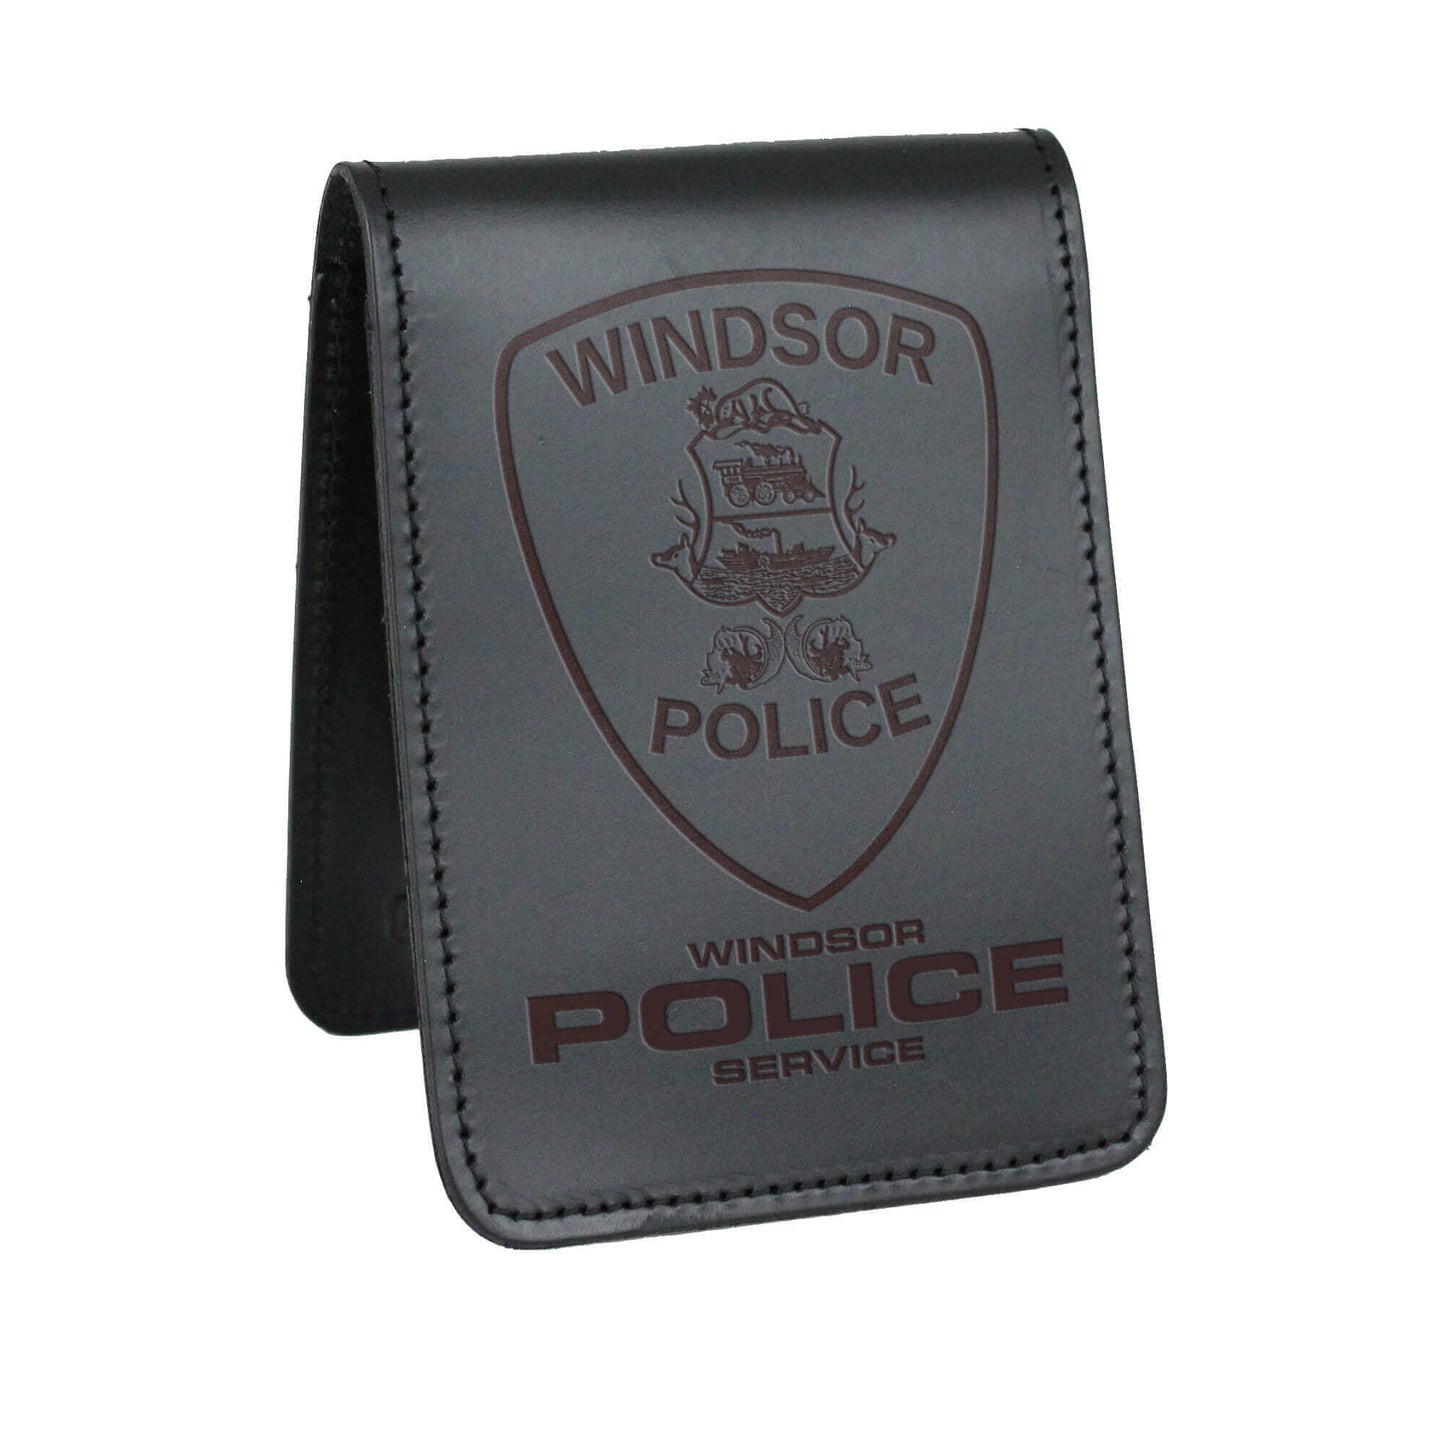 Windsor Police Service Notebook Cover